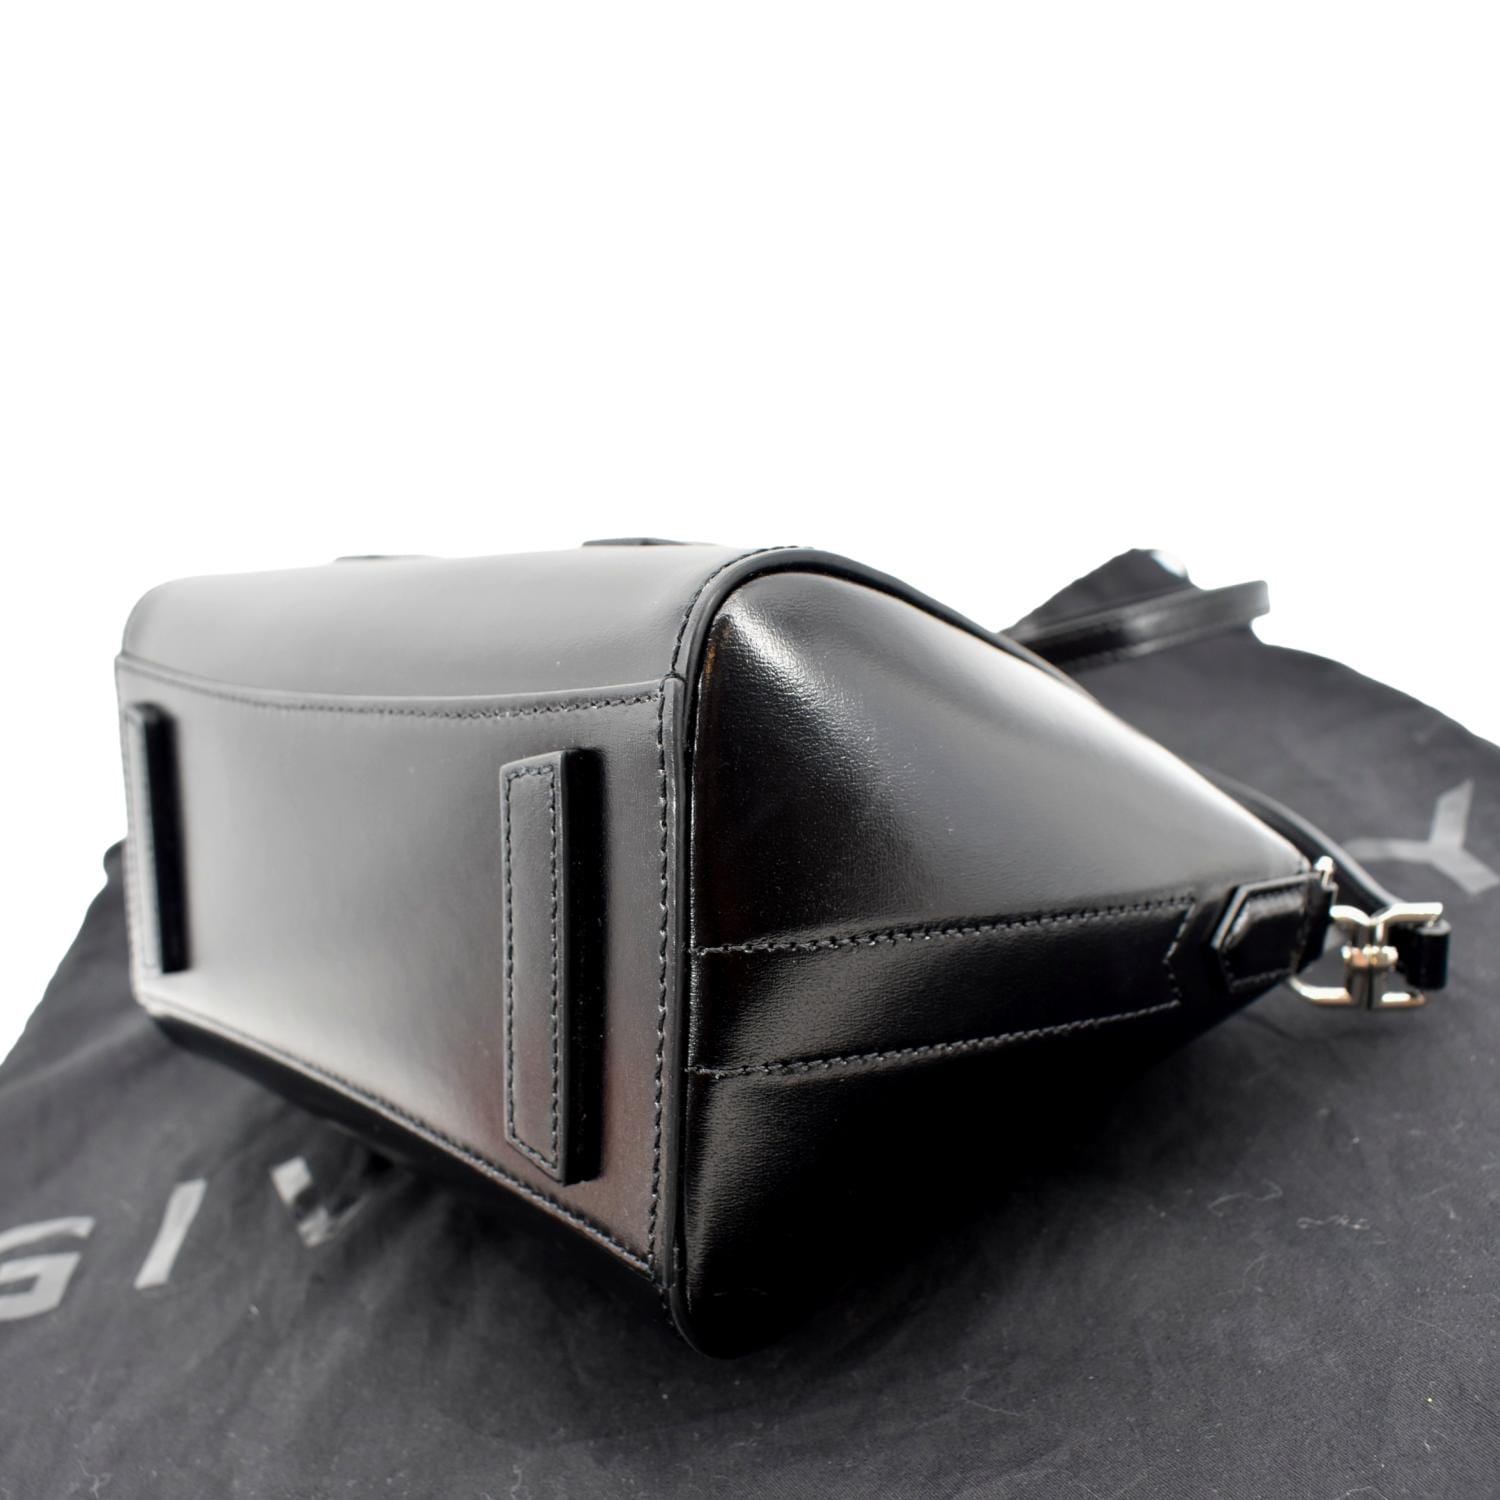 Givenchy Antigona Small Classic Smooth Black Calf Leather Tote Bag